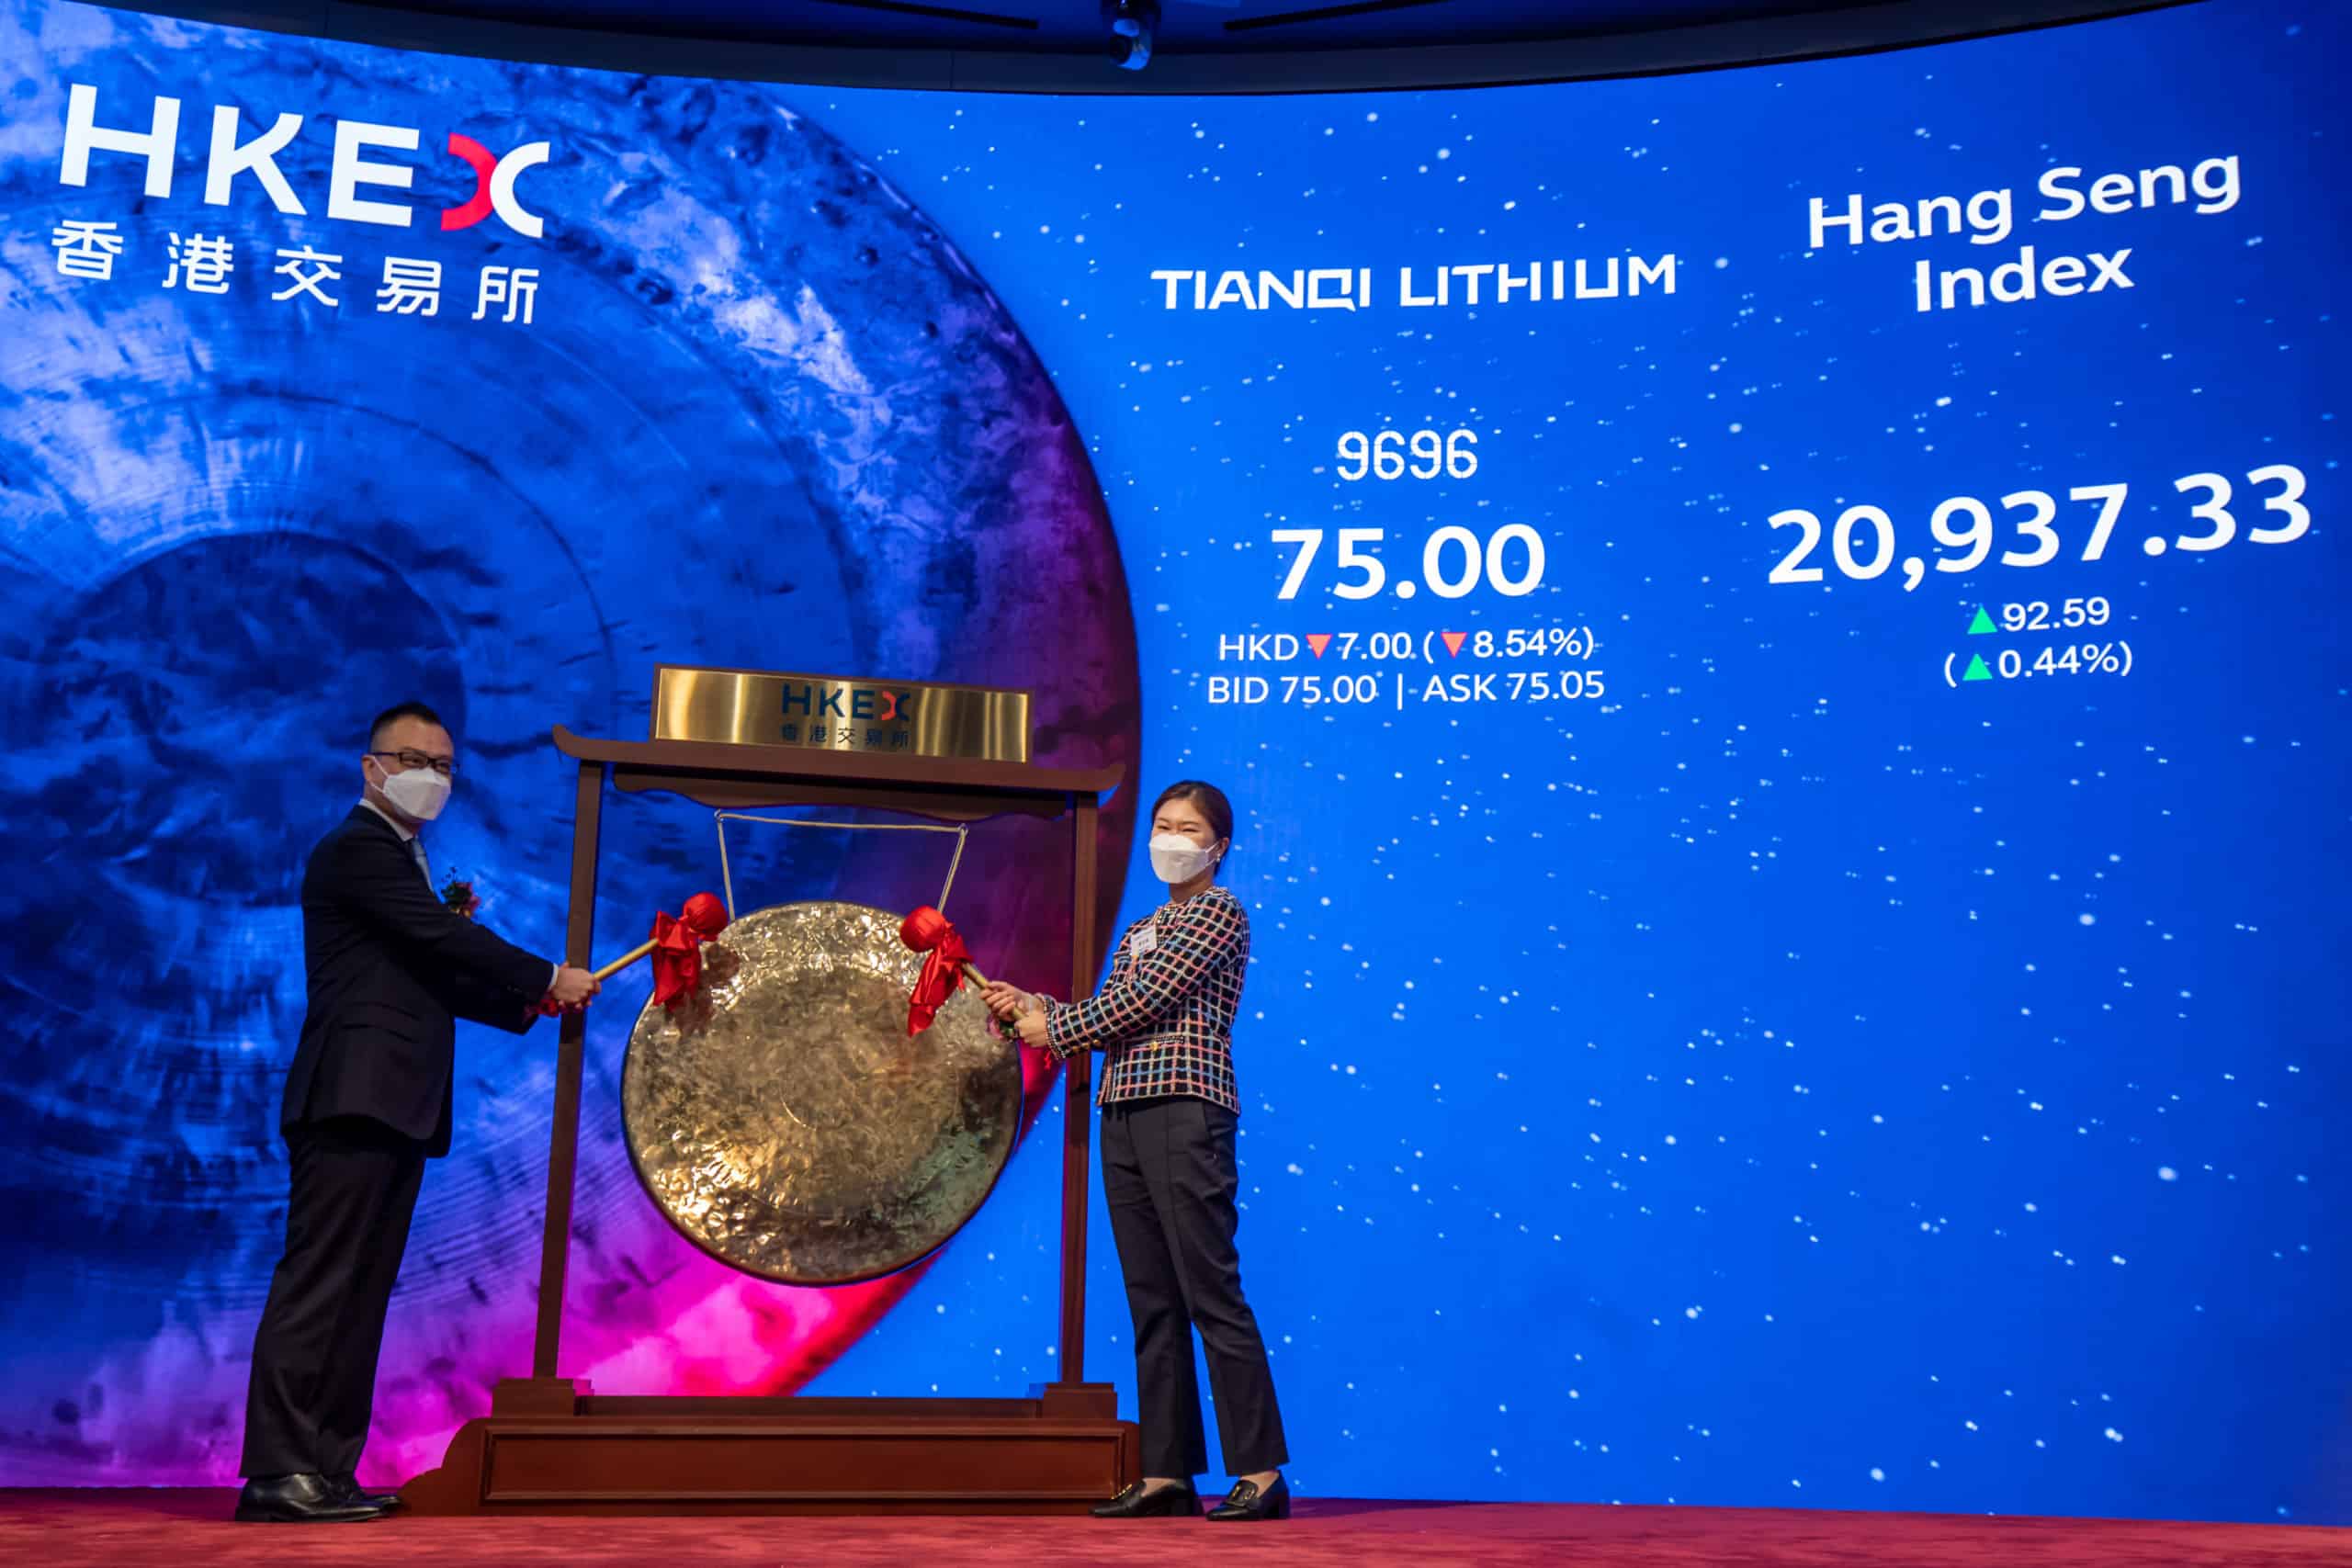 Tianqi Lithium IPO on the Hong Kong Exchange